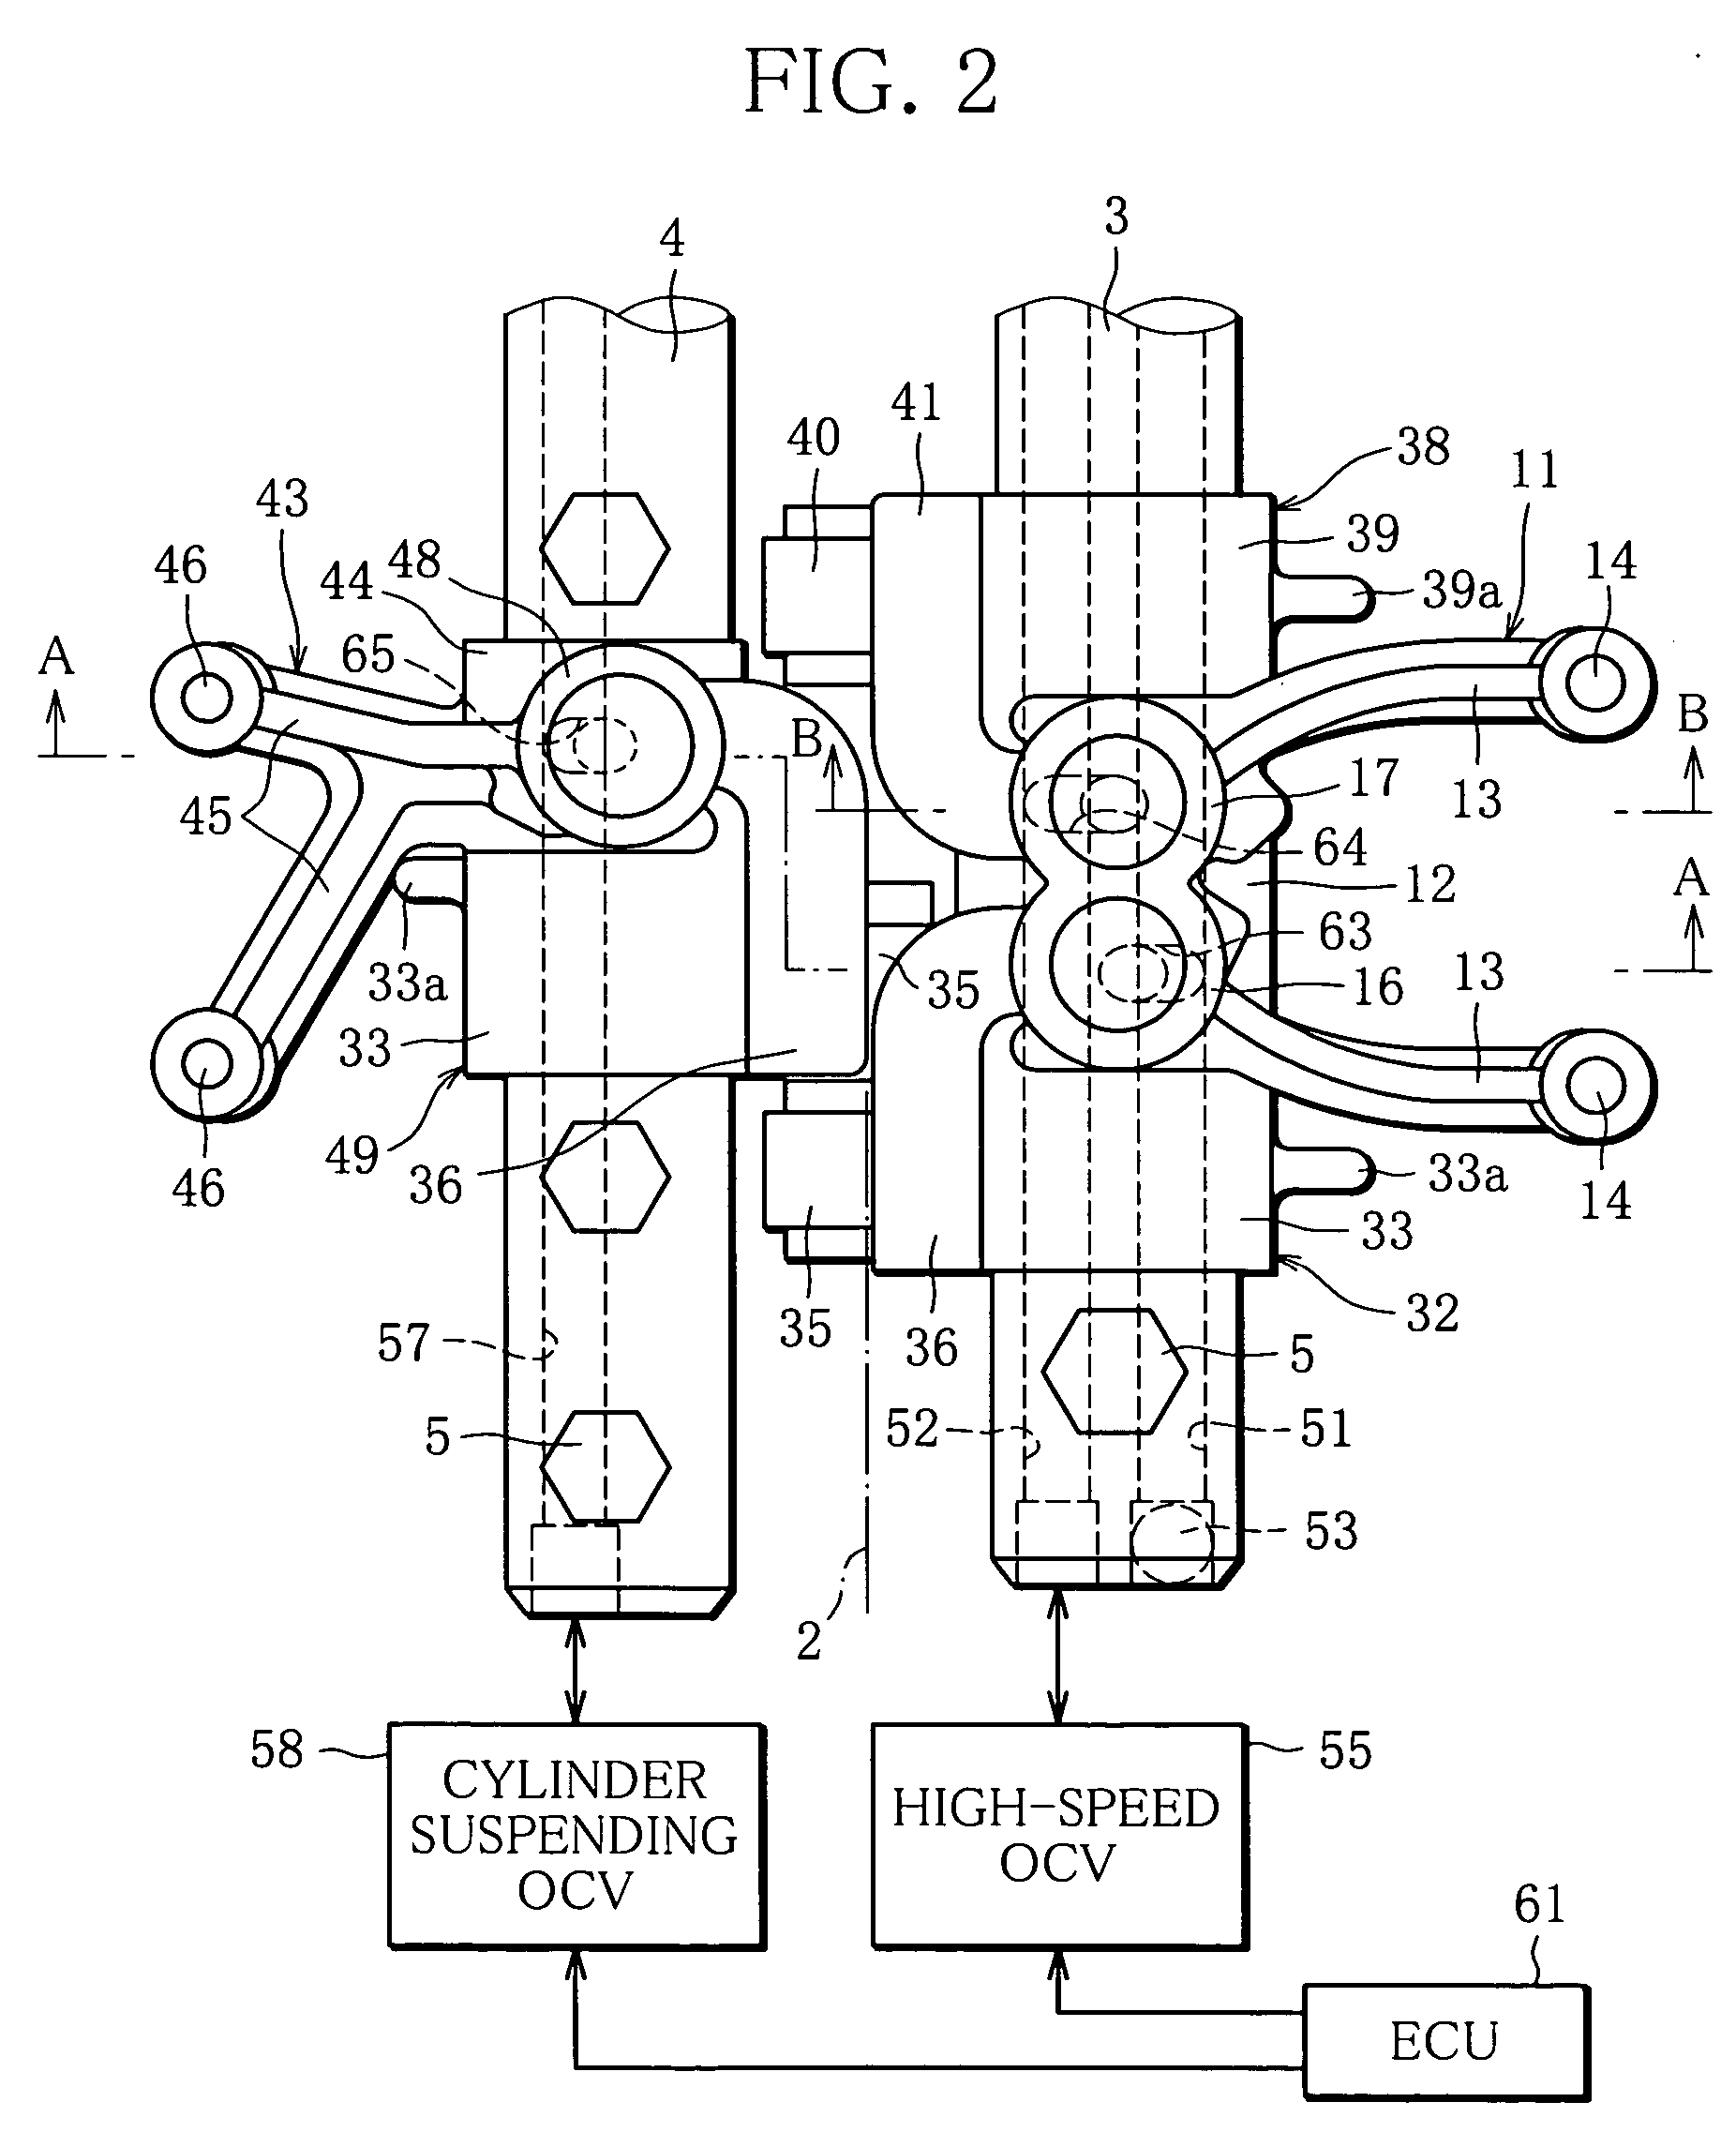 Valve gear of an internal combustion engine